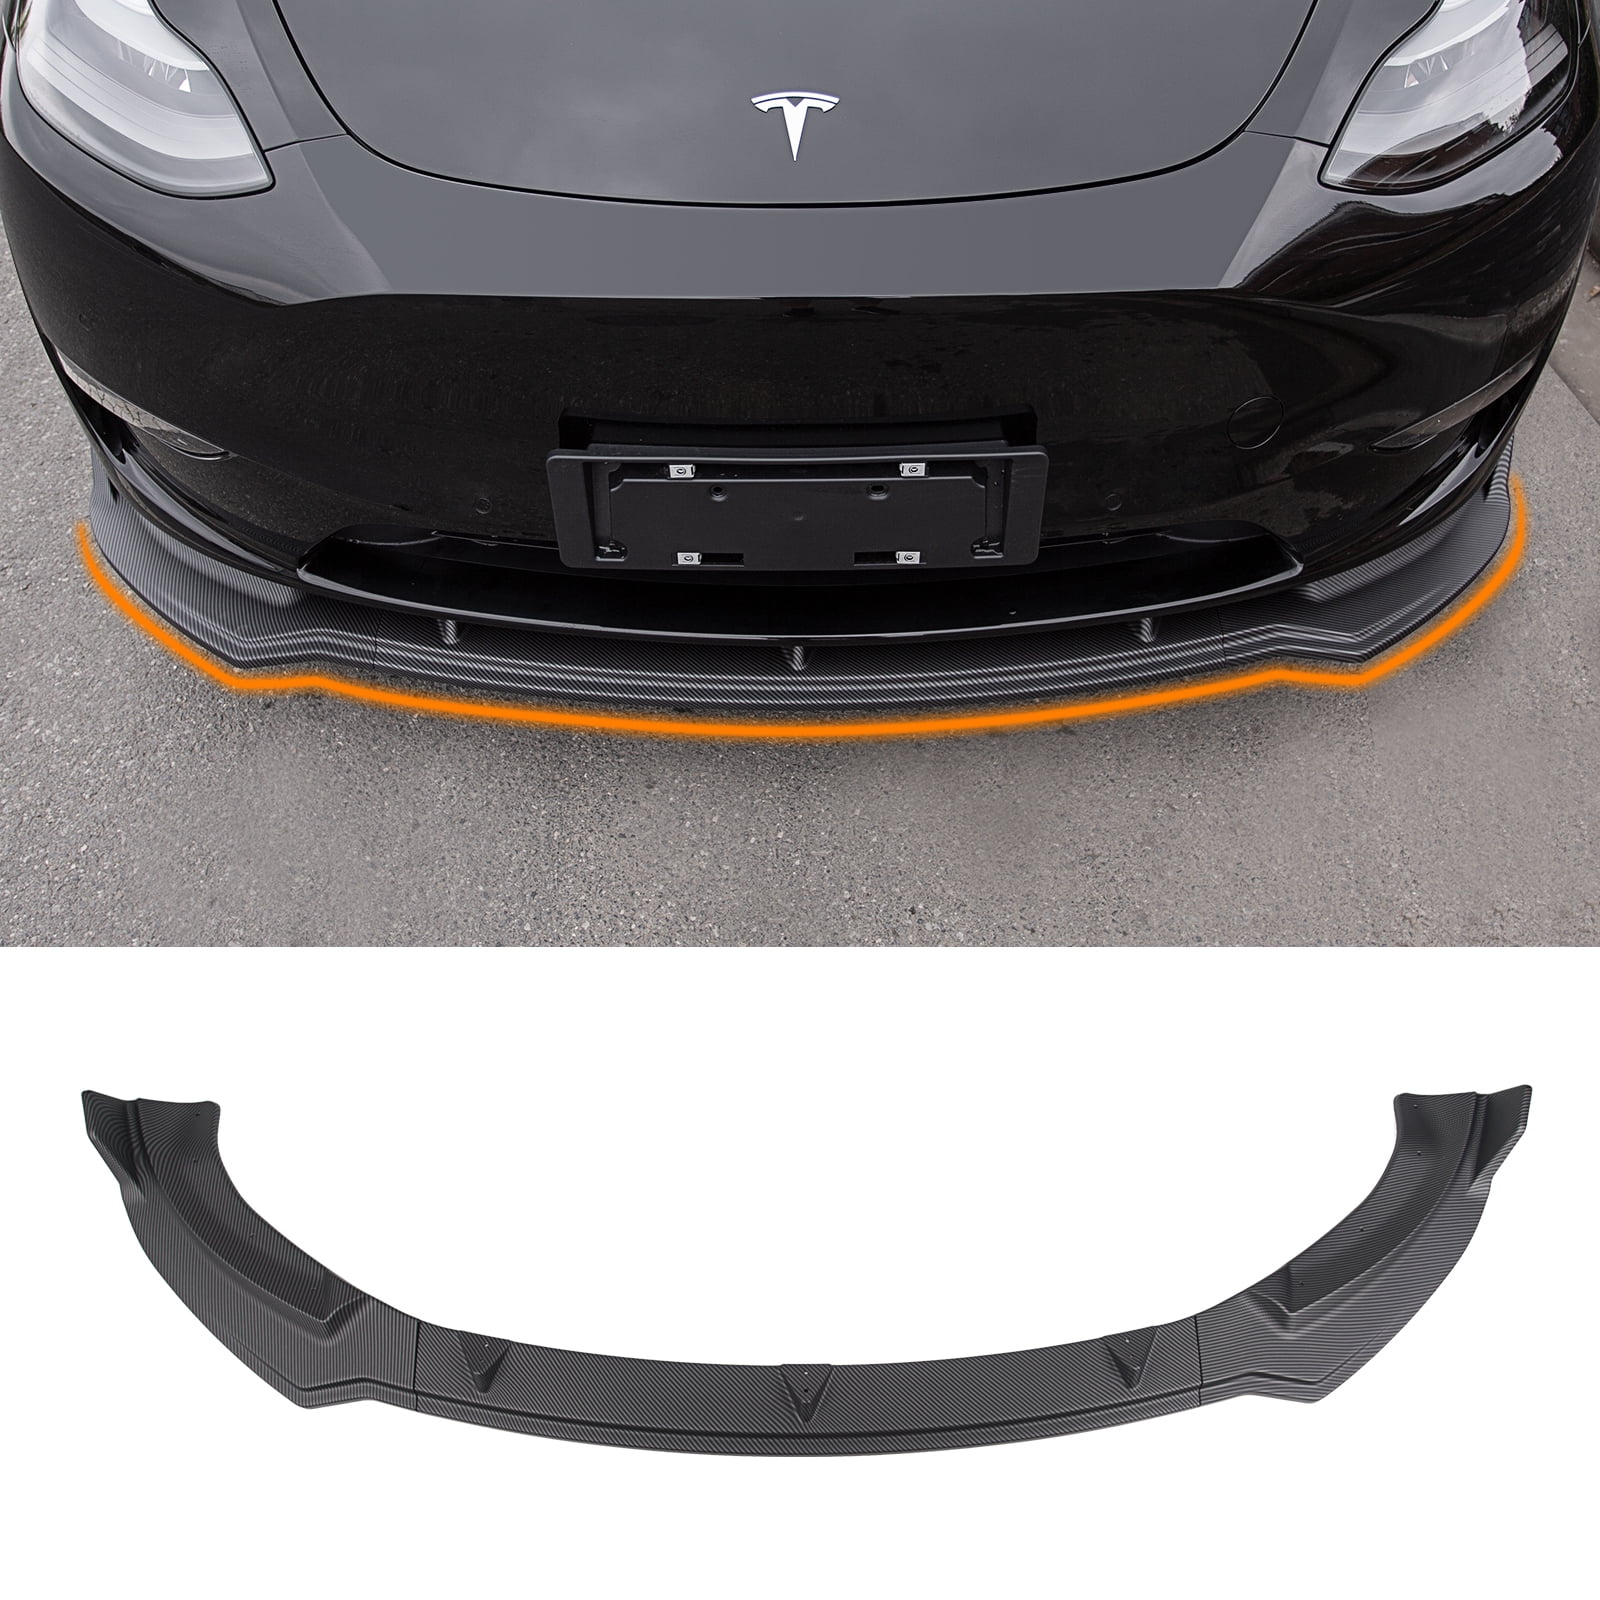 2Pcs Red Carbon Fiber Exterior Car B-Pillar Cover Trim For Tesla